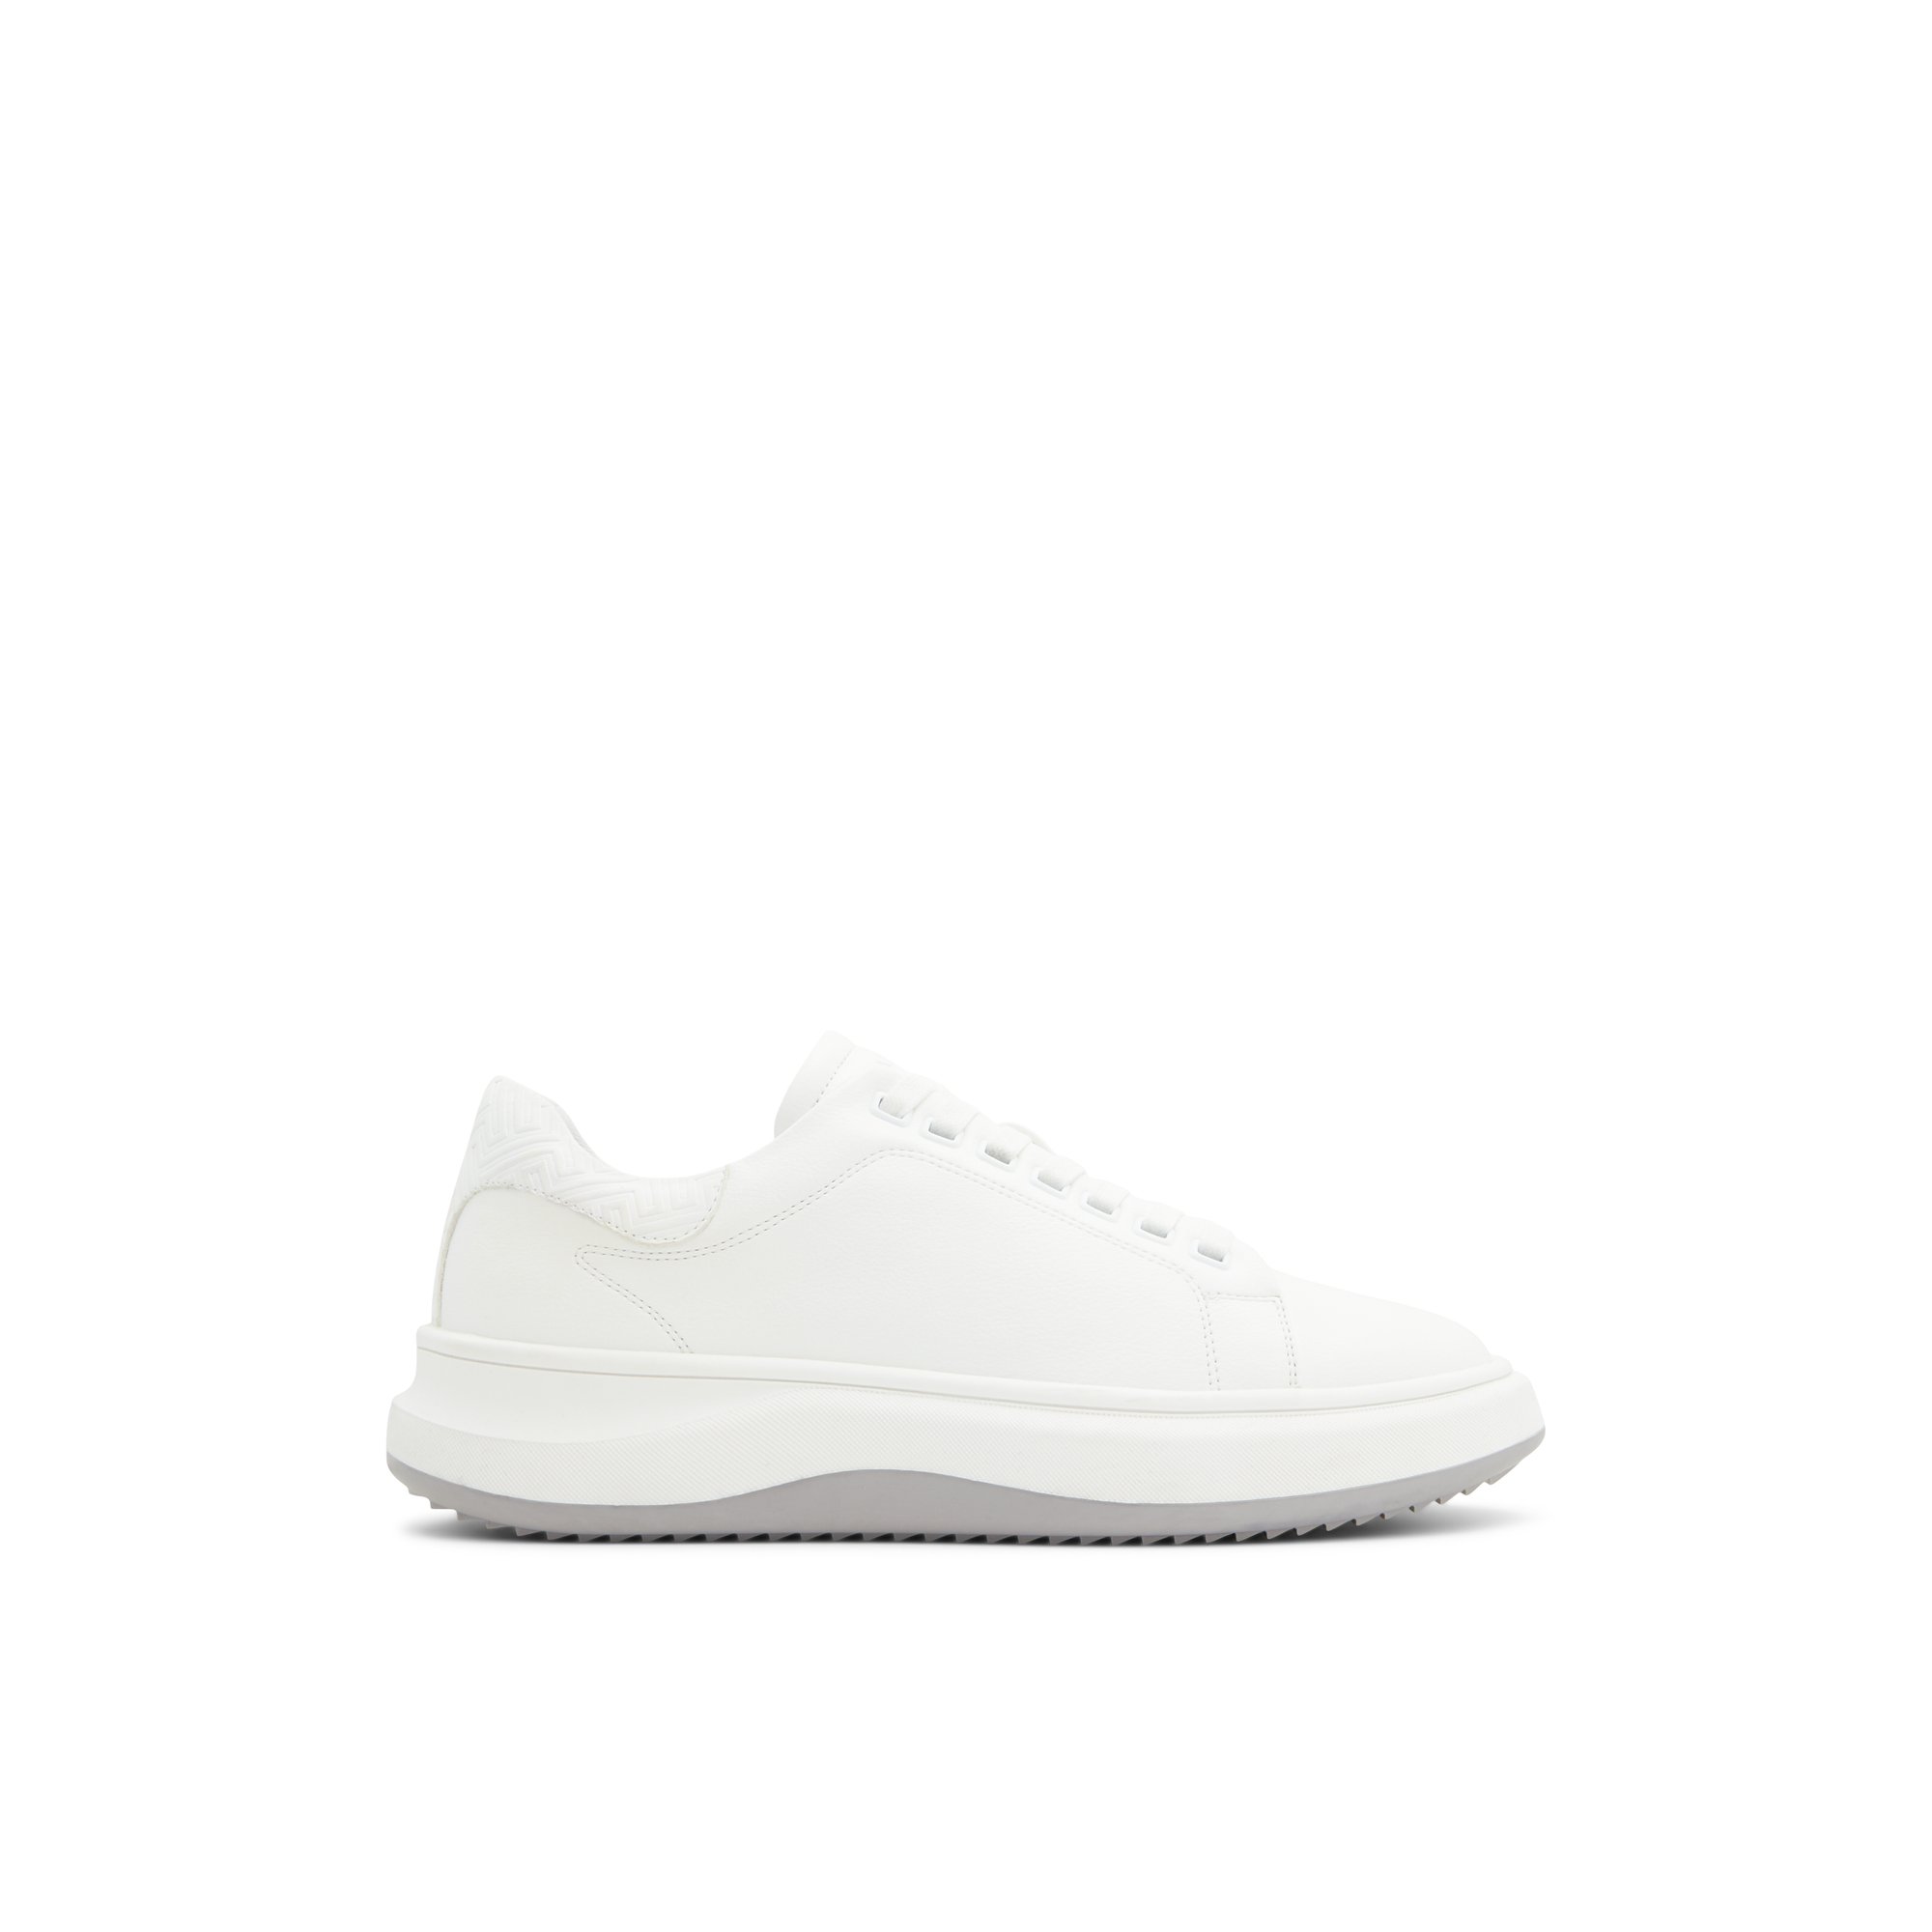 ALDO Wavespec - Men's Low Top Sneakers - White